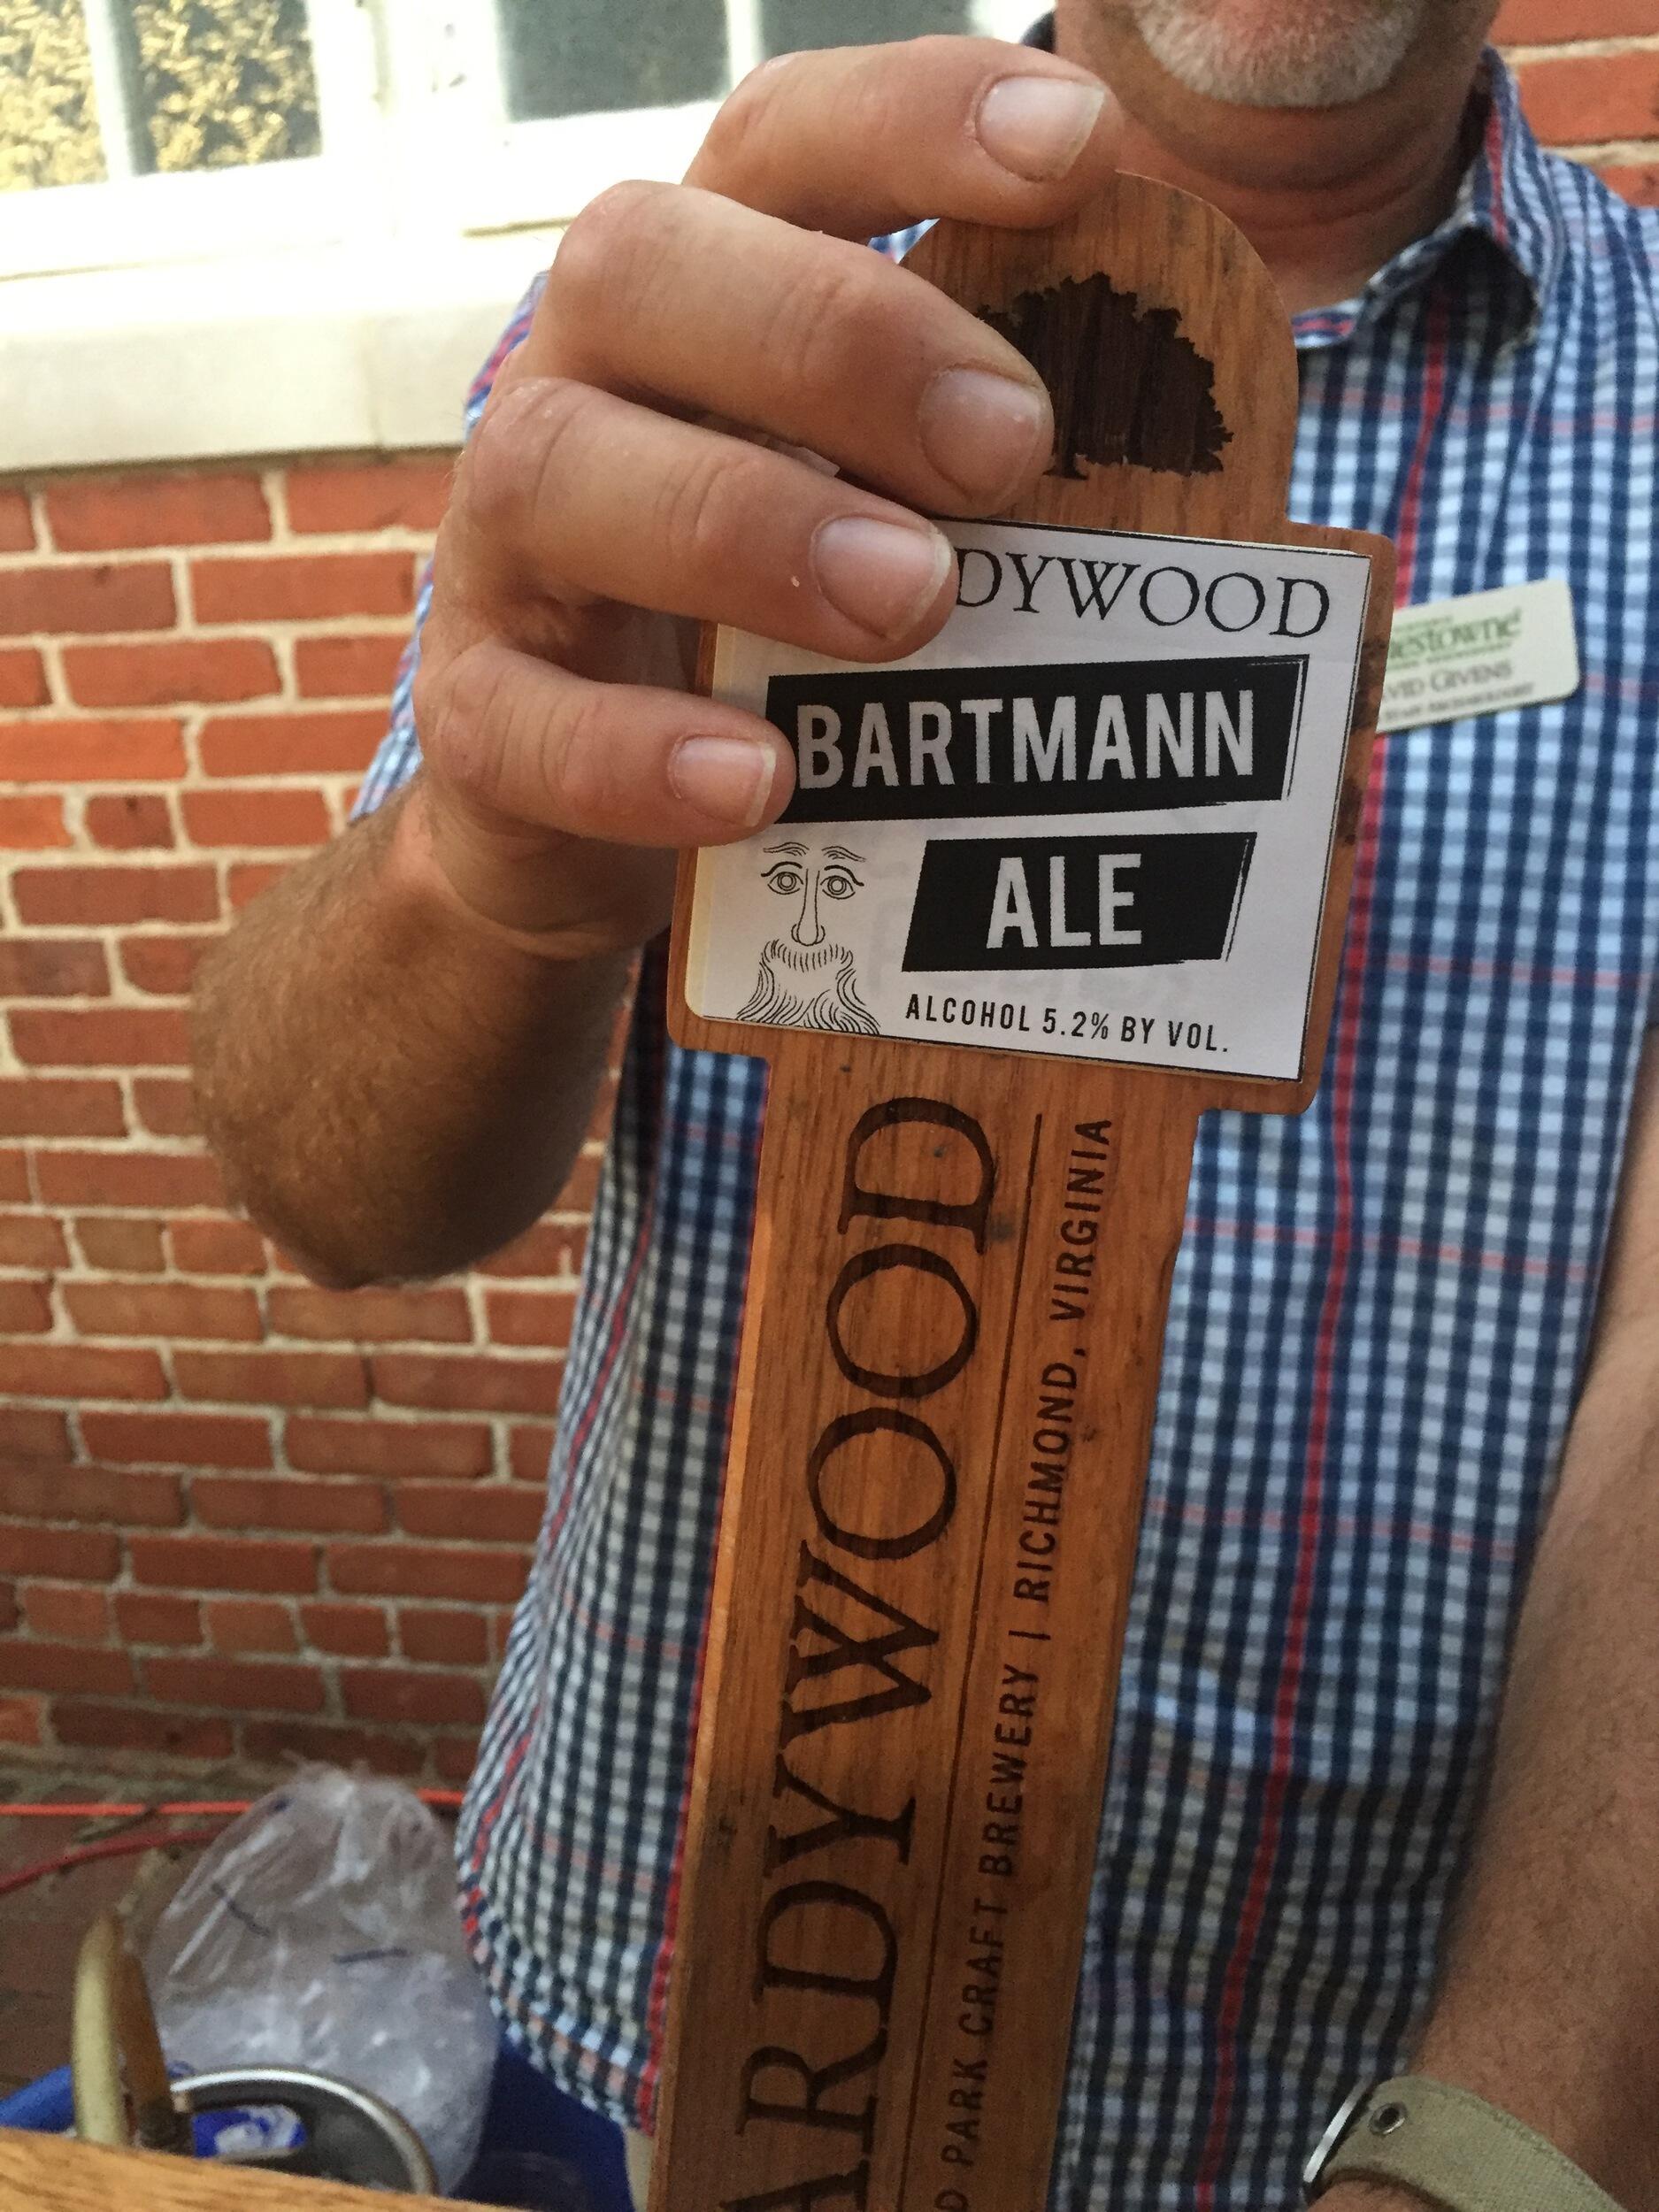 Hardywood is naming the Jamestown brew Bartmann Ale.